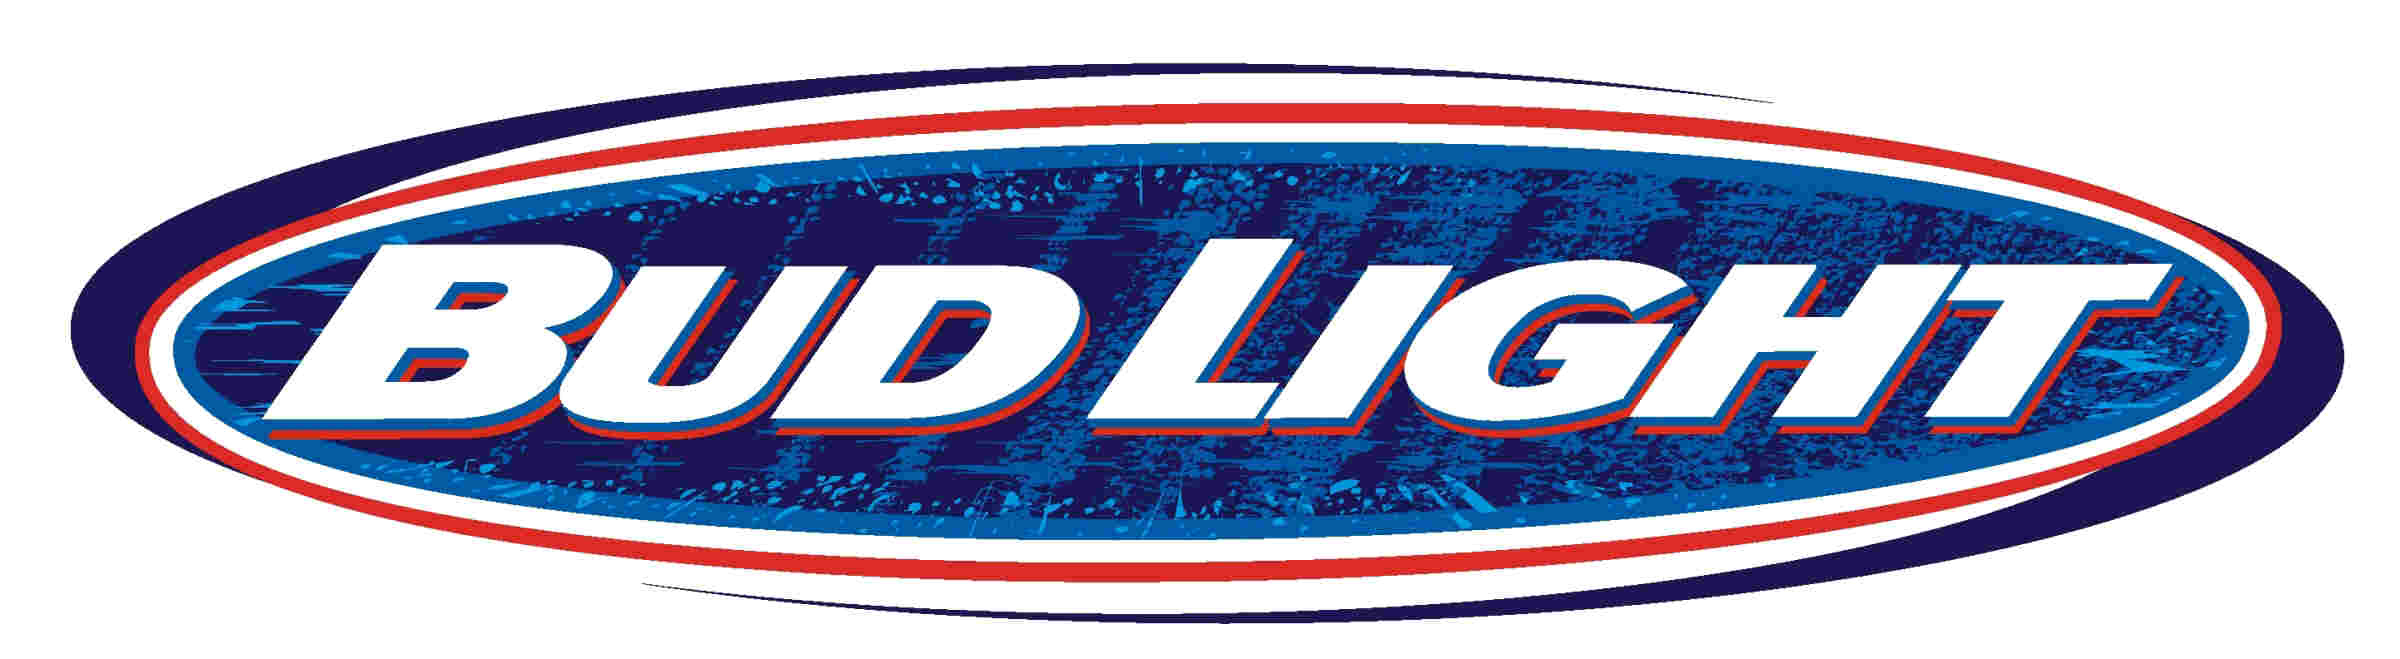 Bud Light Logo Cliparts co